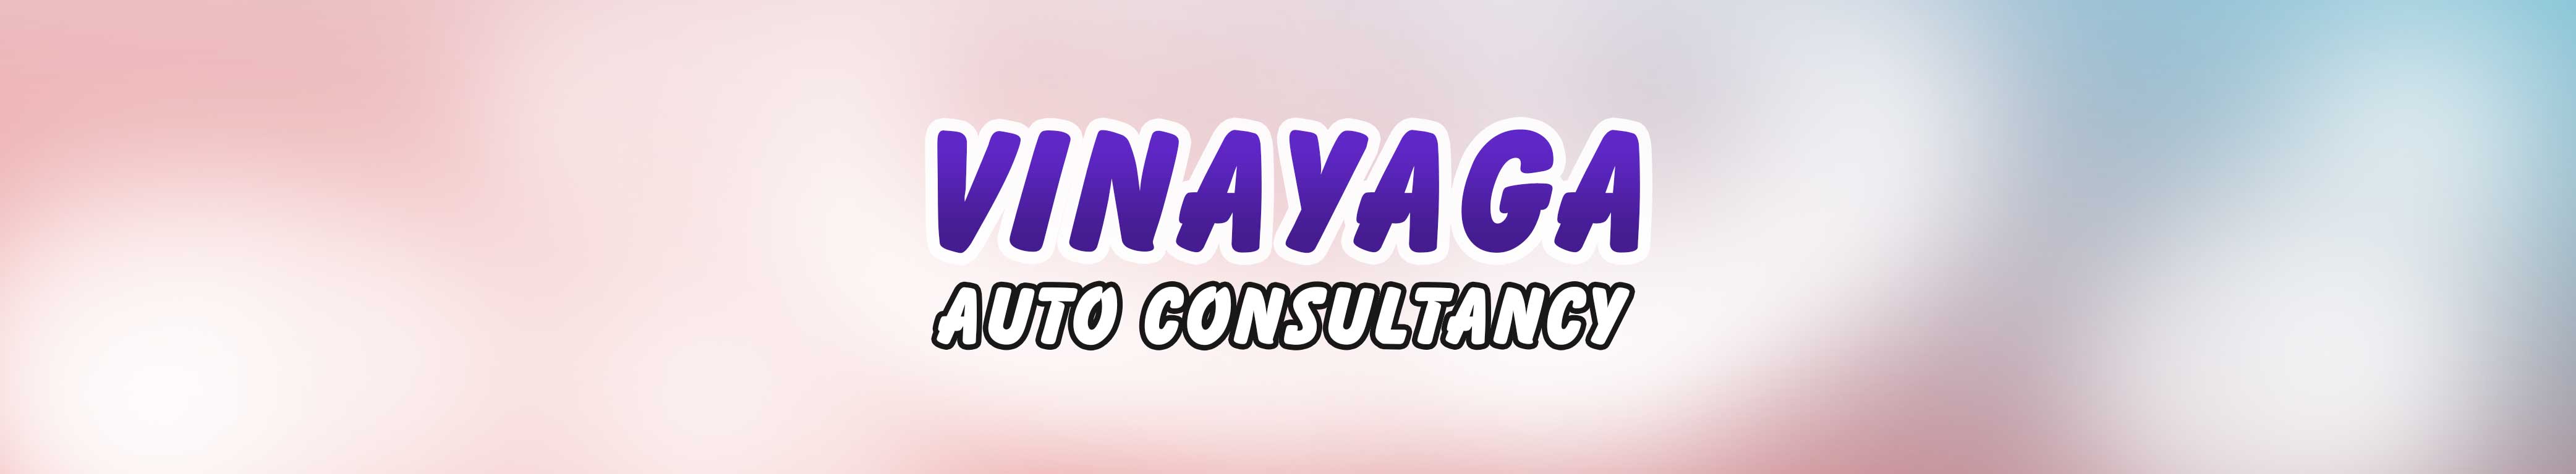 Vinayaga Auto Consultancy Banner Image